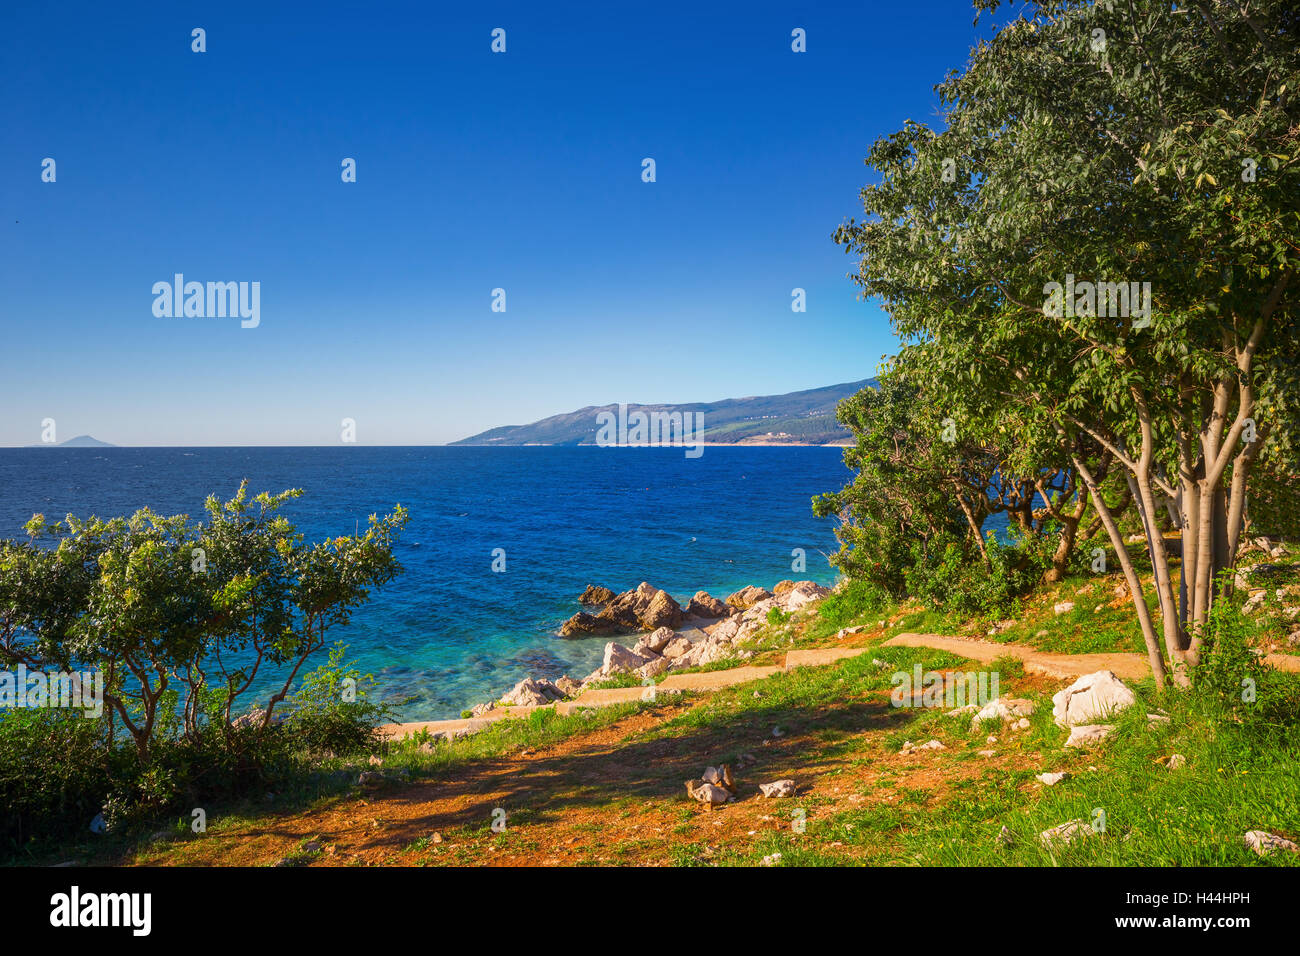 Amazing rocky beach with crystalic clean sea water with pine trees on the coast of Adriatic Sea, Istria, Croatia Stock Photo